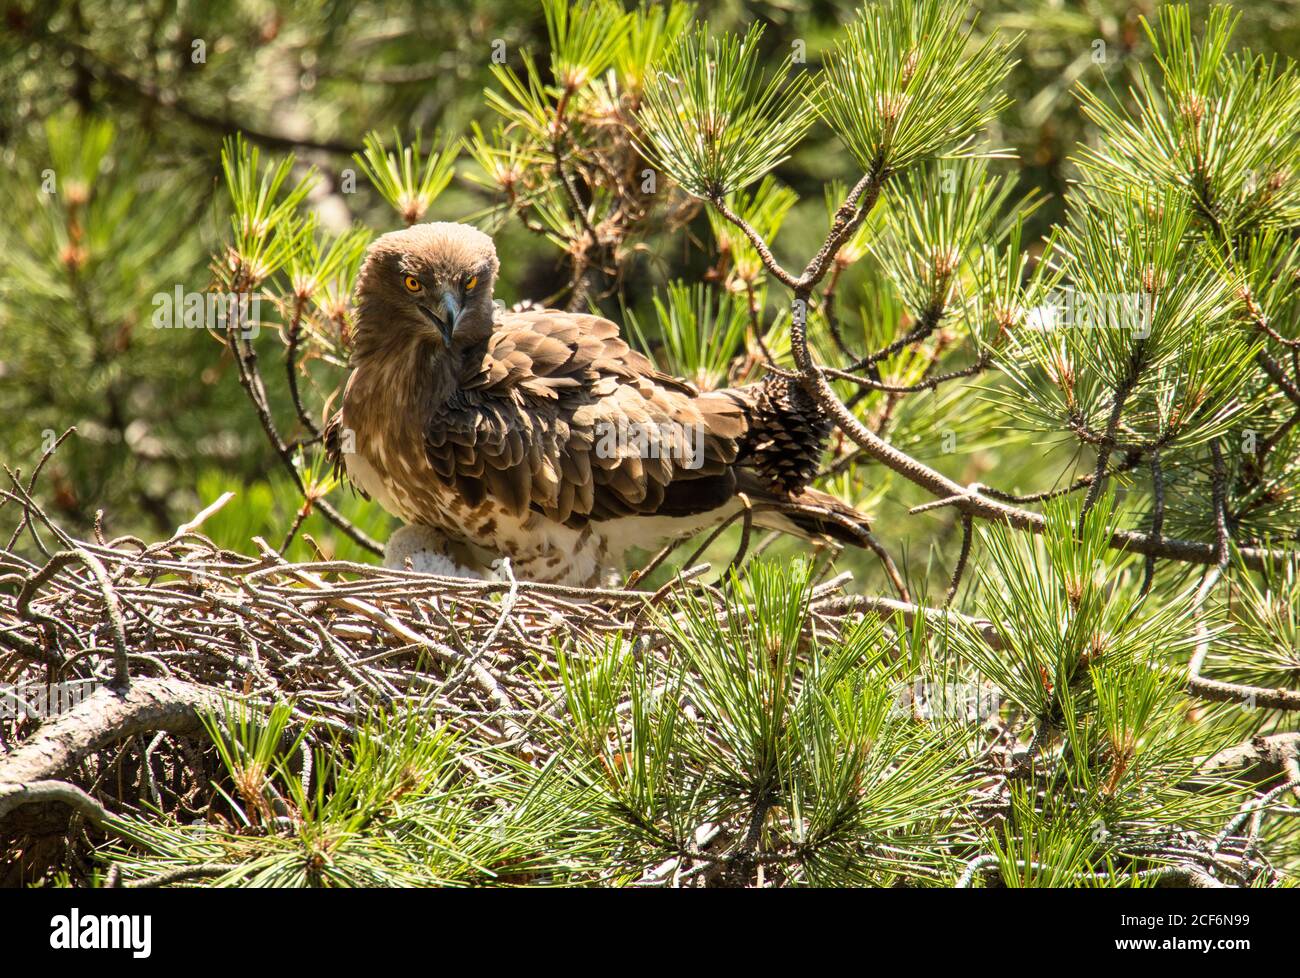 Furious wild eagle sitting near little bird in nest between coniferous twigs Stock Photo